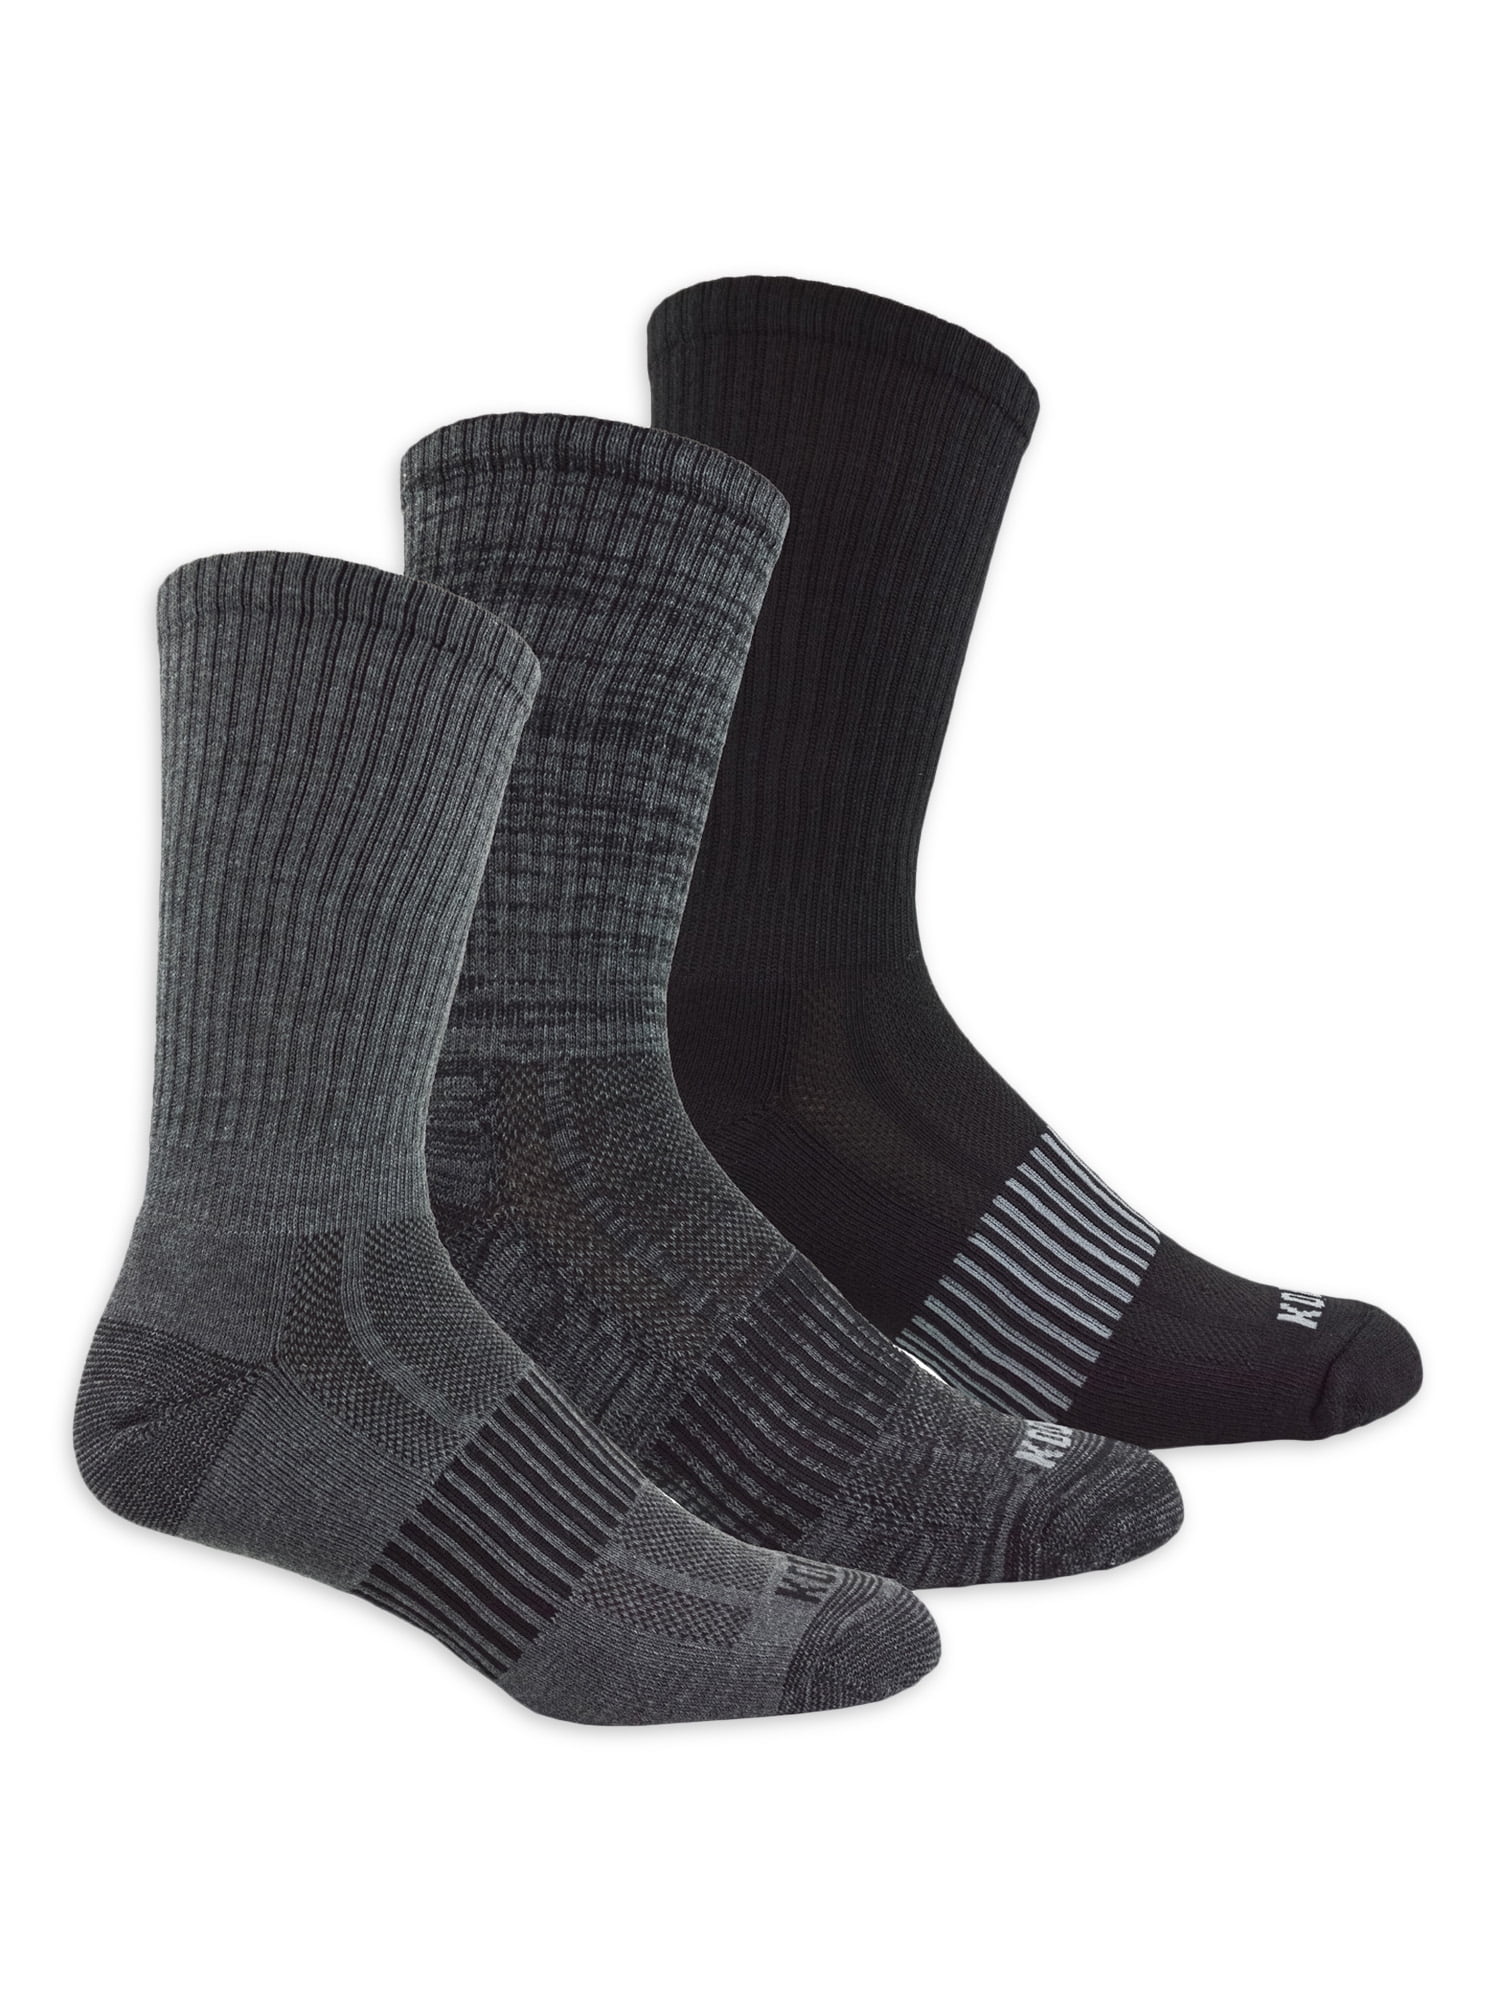 12 Pairs Kodiak Men Athletic Performance Socks Size 7-13 Black